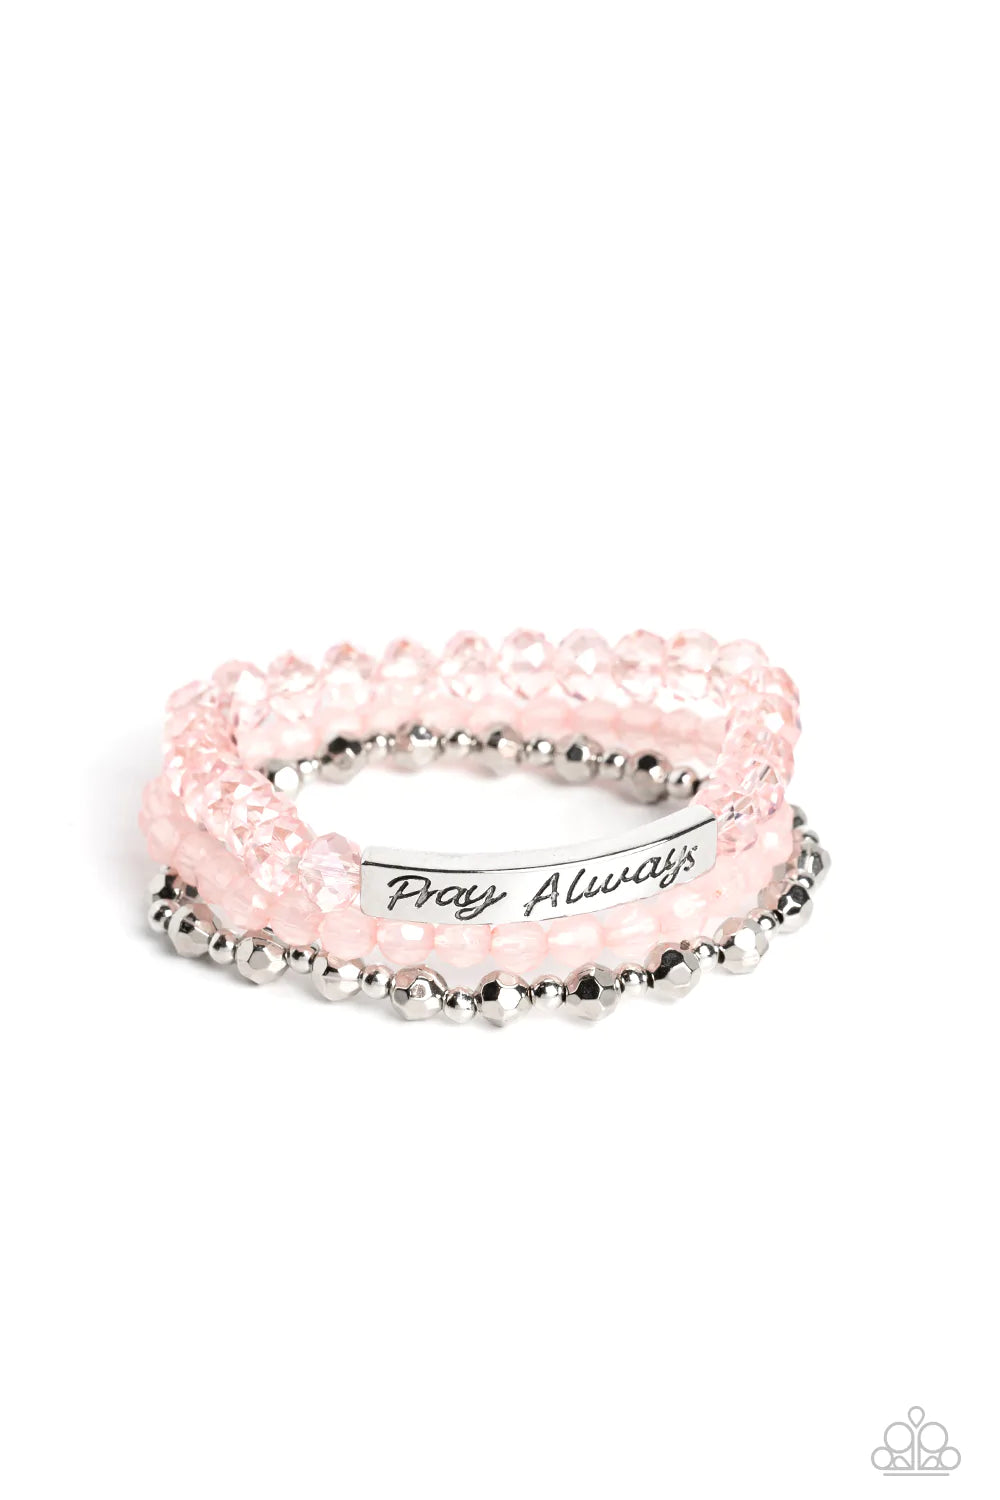 Pray Always - Pink Bracelets